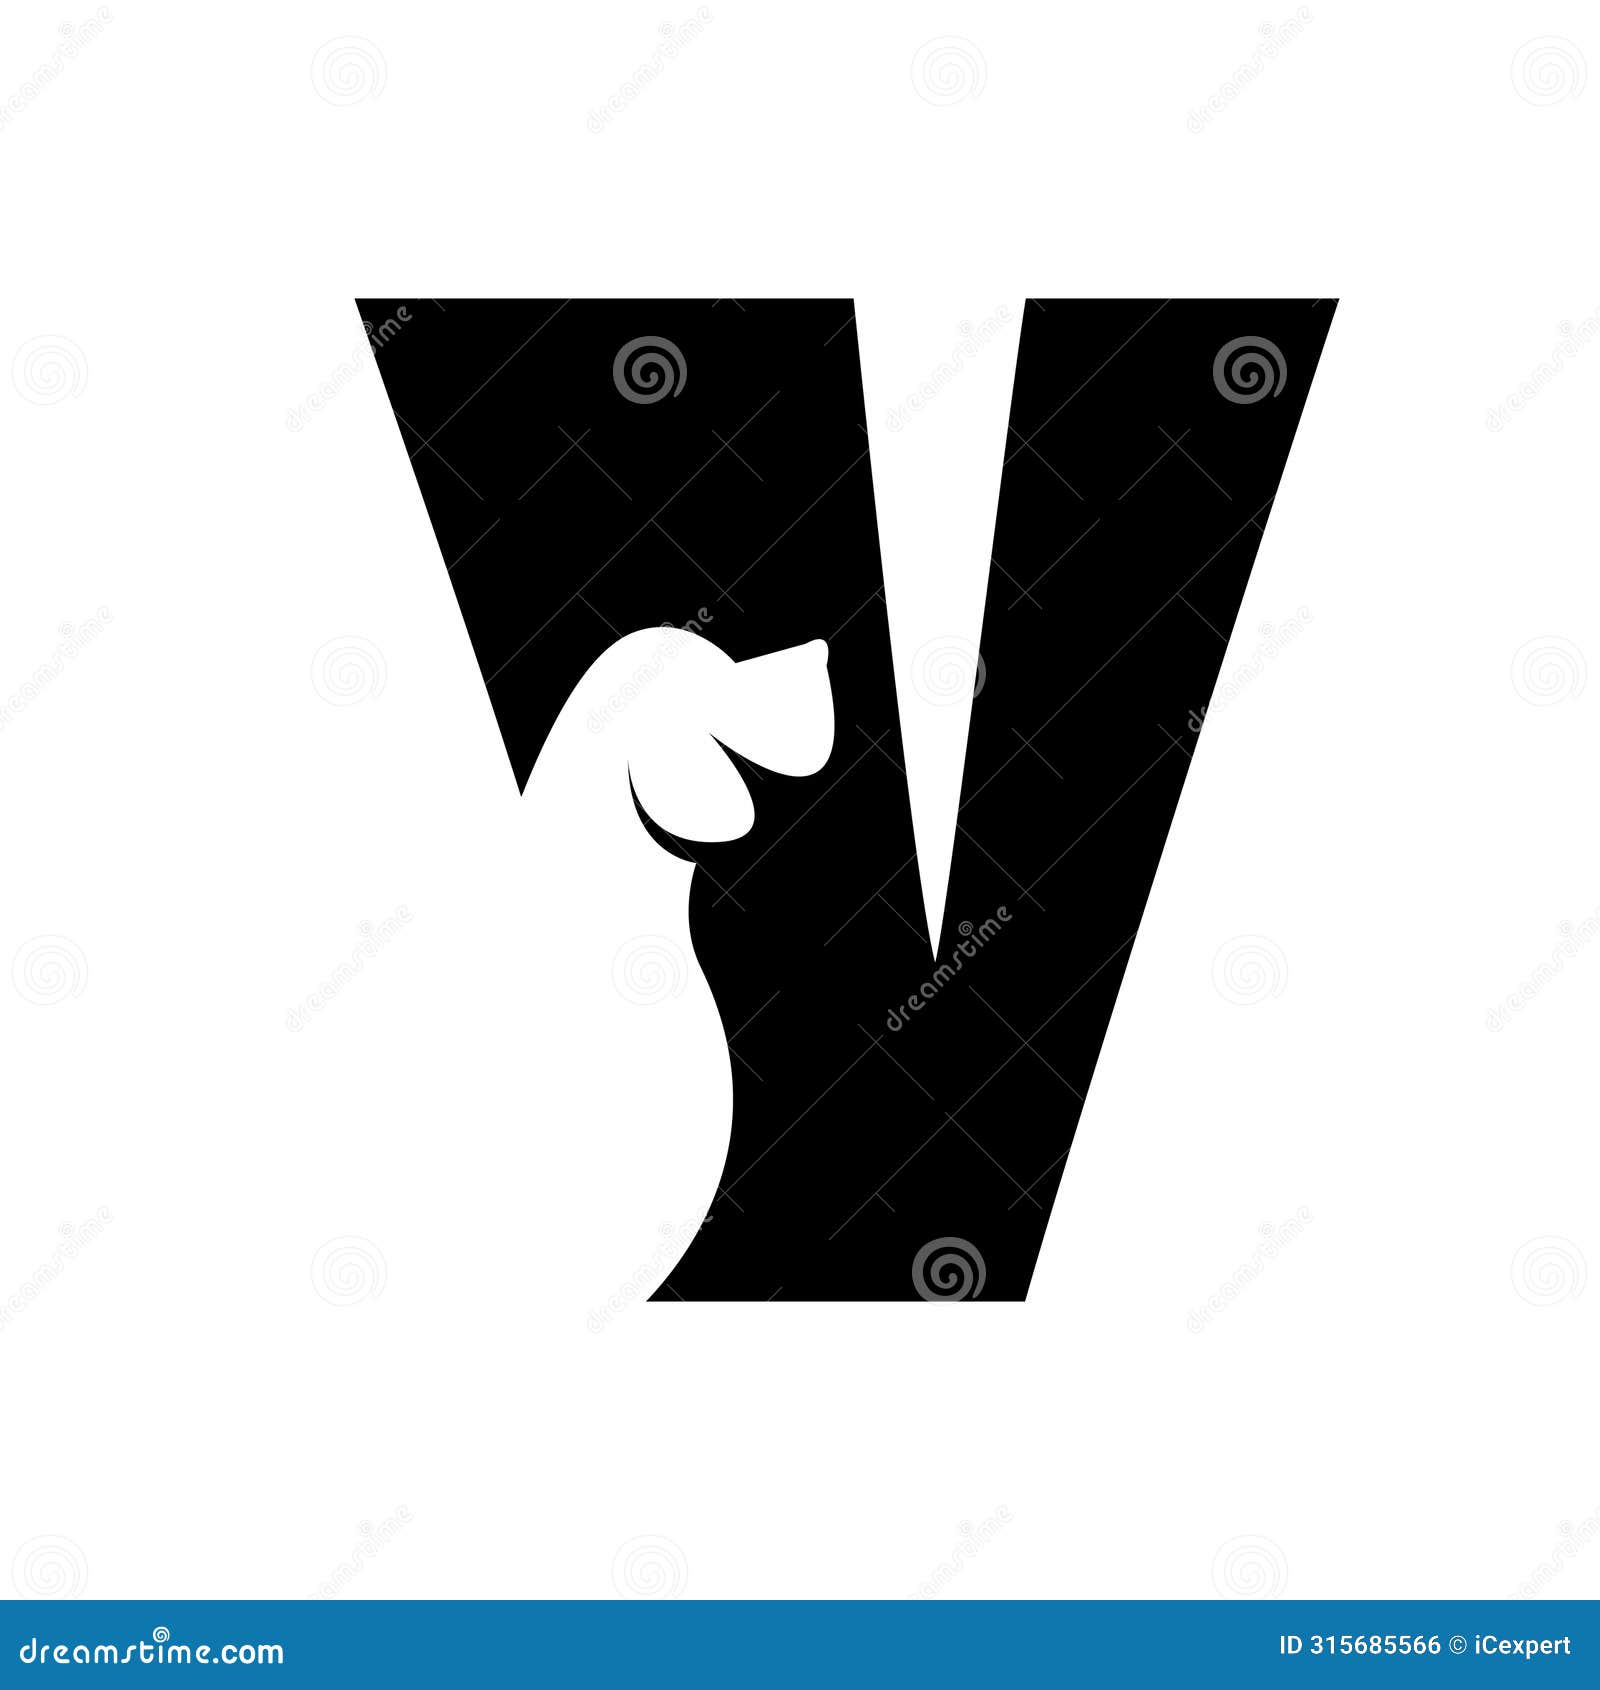 v letter with a negative space dog logo